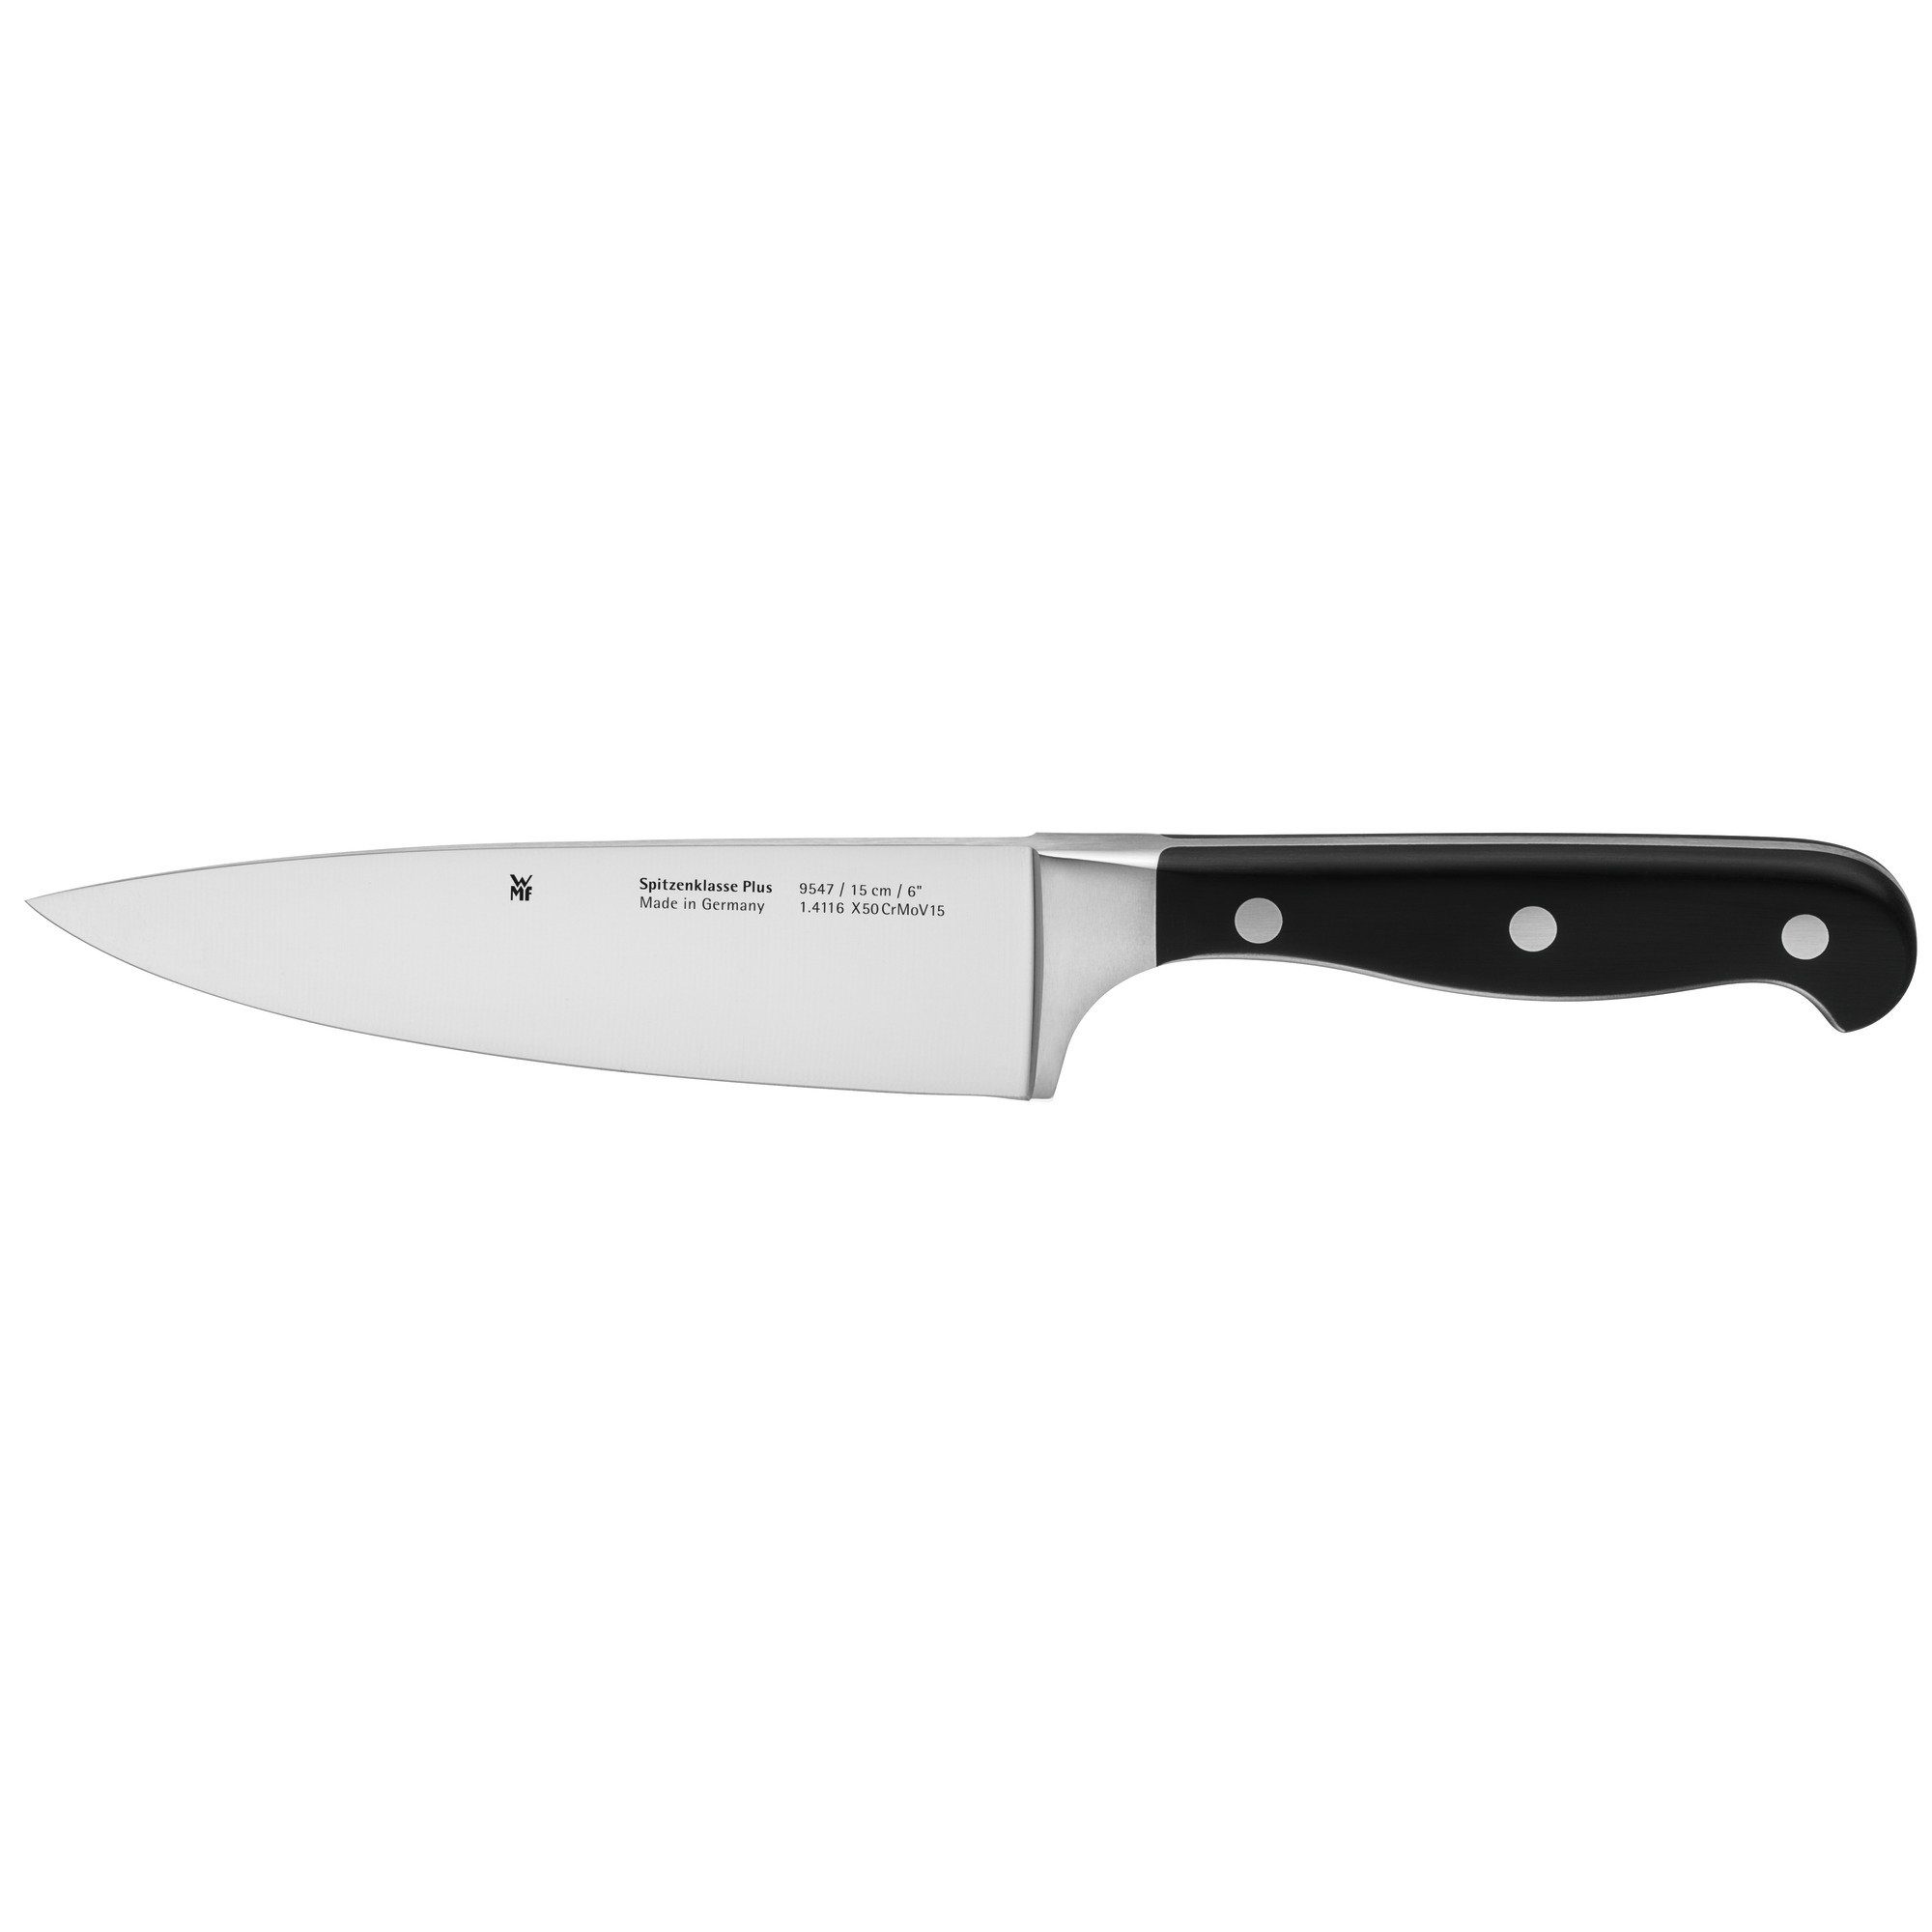 WMF Kochmesser Spitzenklasse Plus, Messer geschmiedet, Küchenmesser. Performance Cut, Spezialklingenstahl